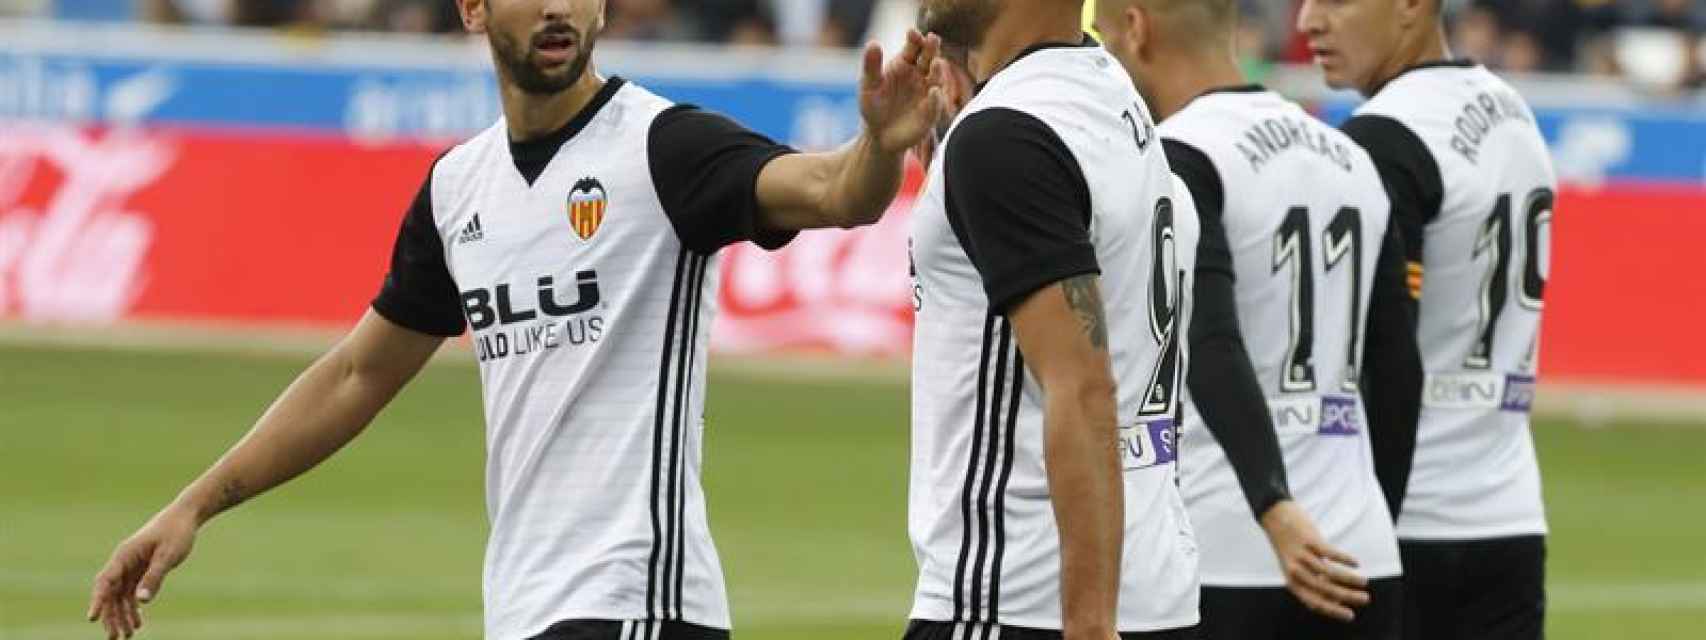 El Valencia celebra un gol de Zaza.